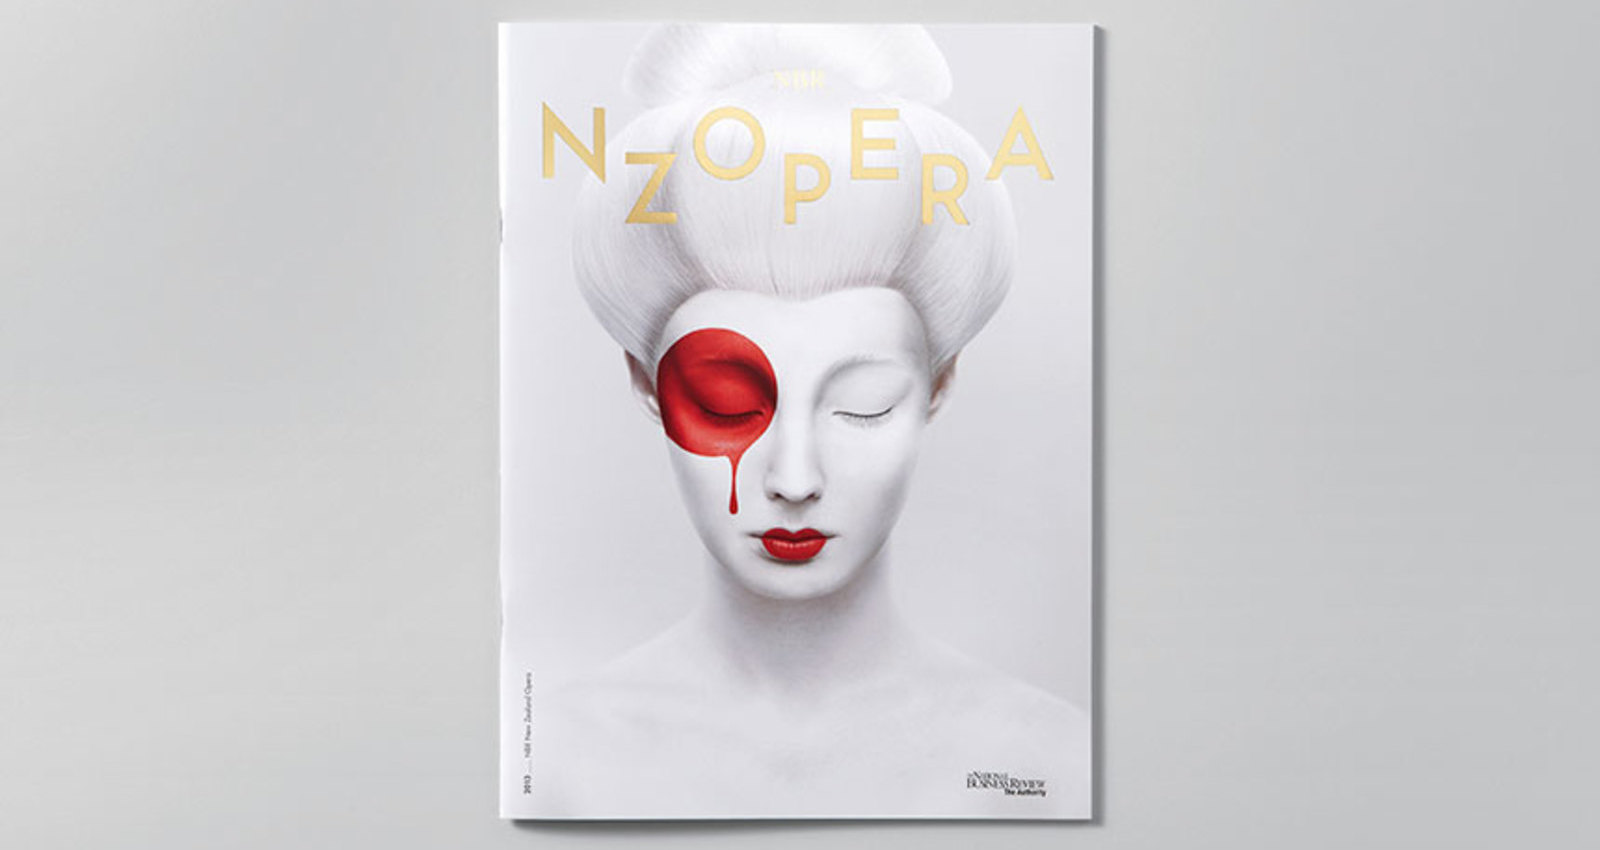 New Zealand Opera